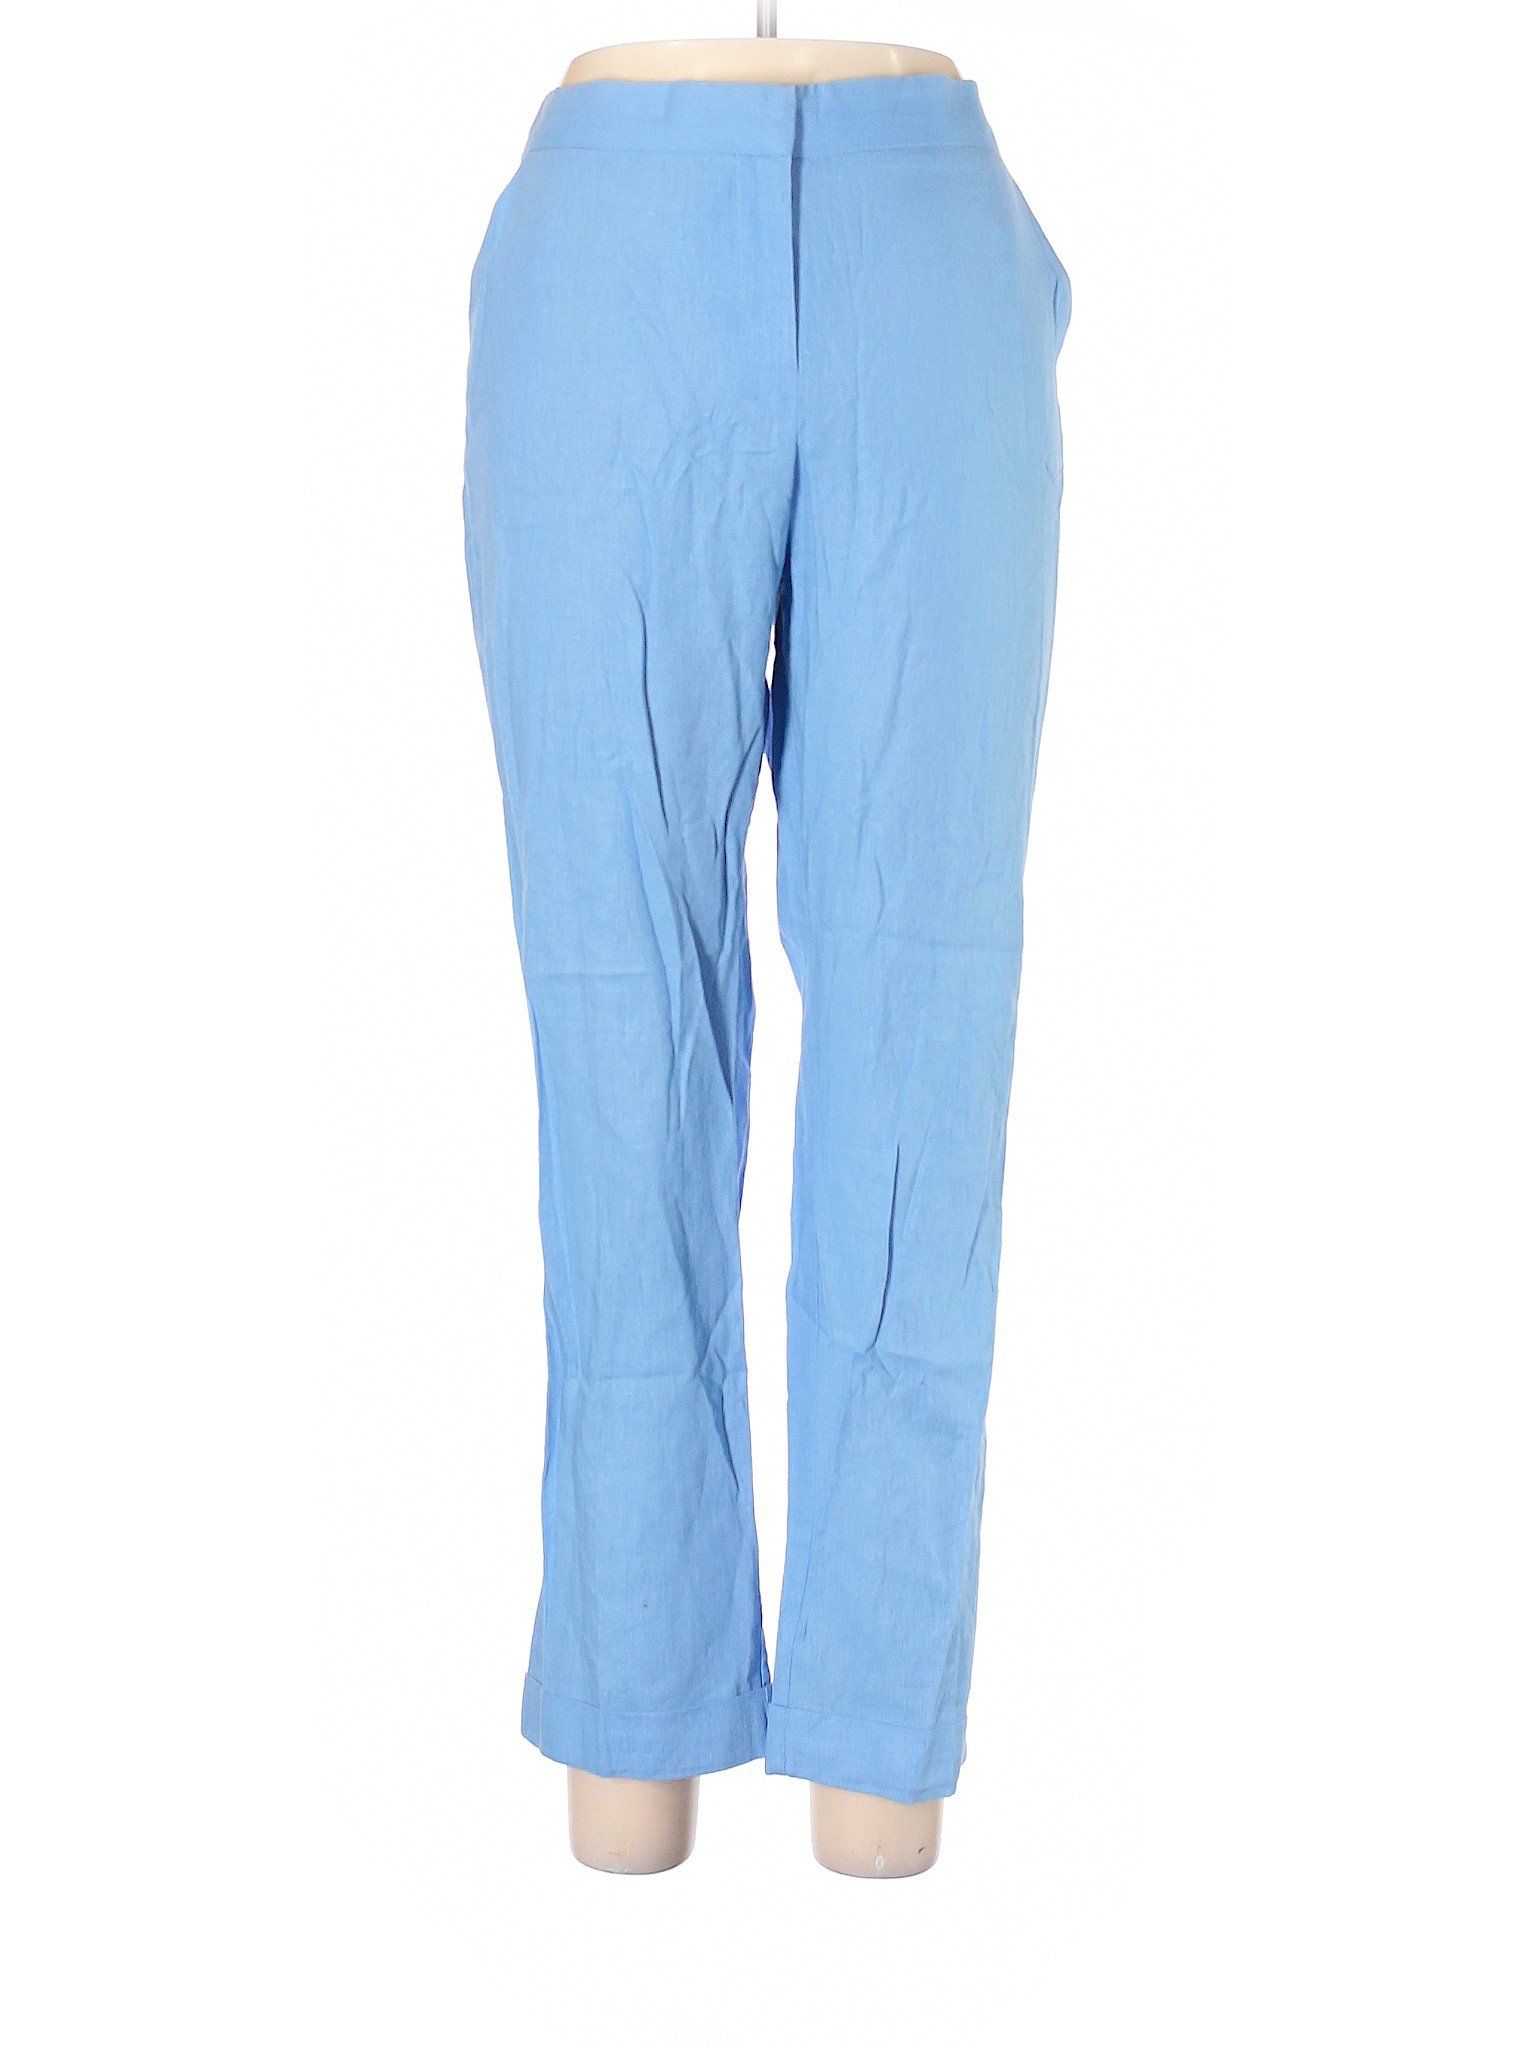 ASOS Women Blue Linen Pants 12 | eBay